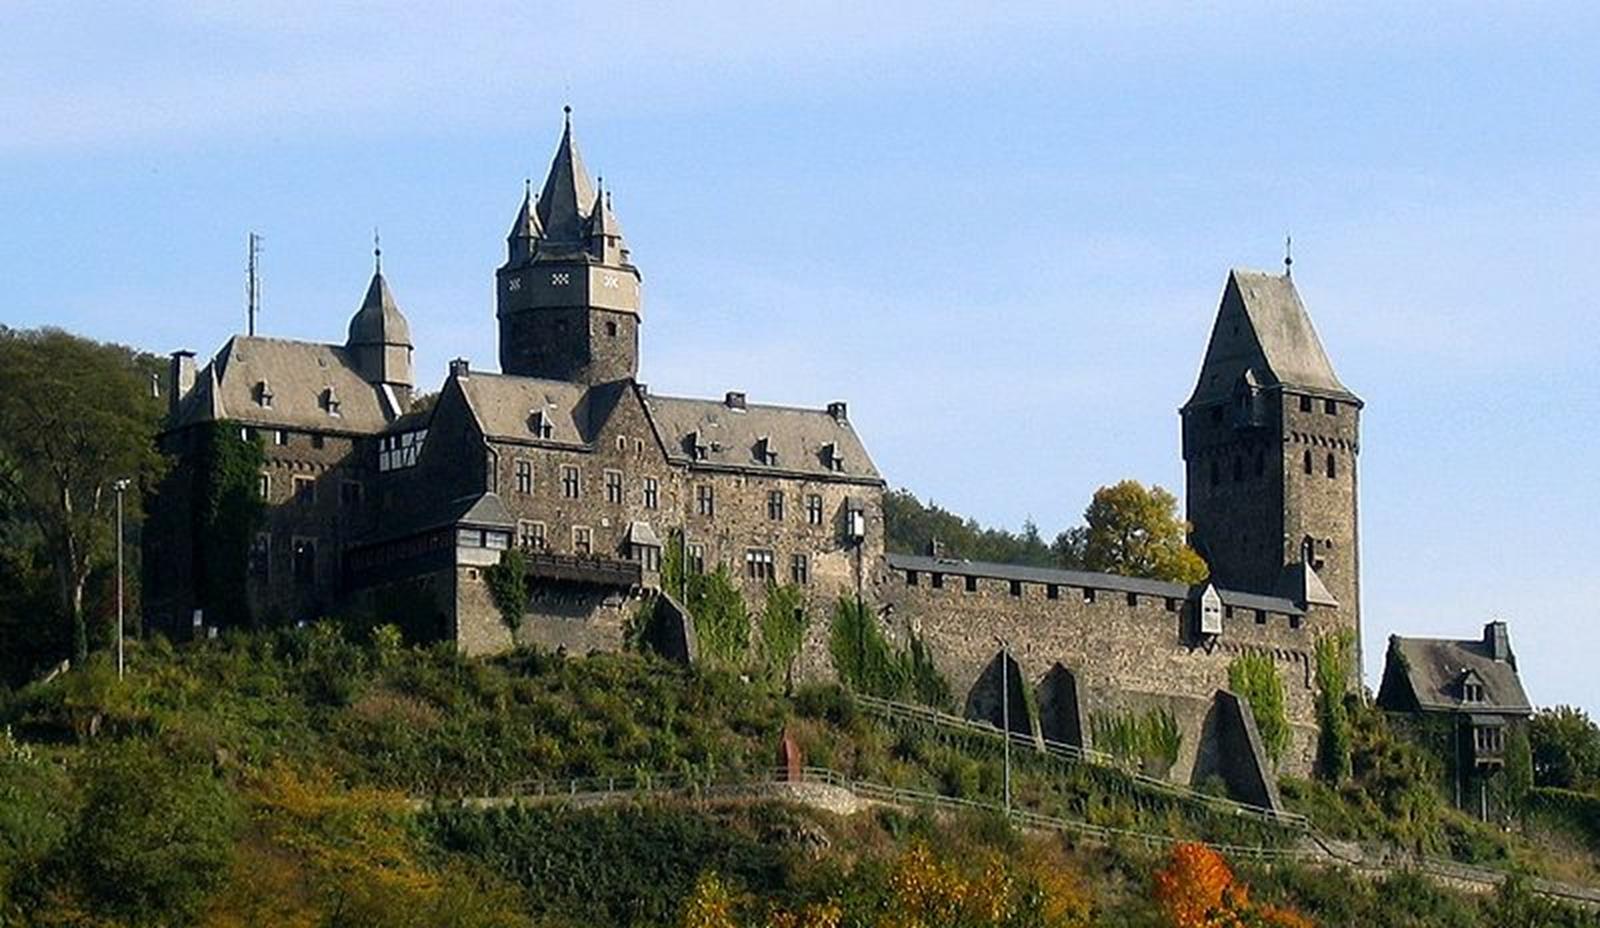 Burg Altena. Credit